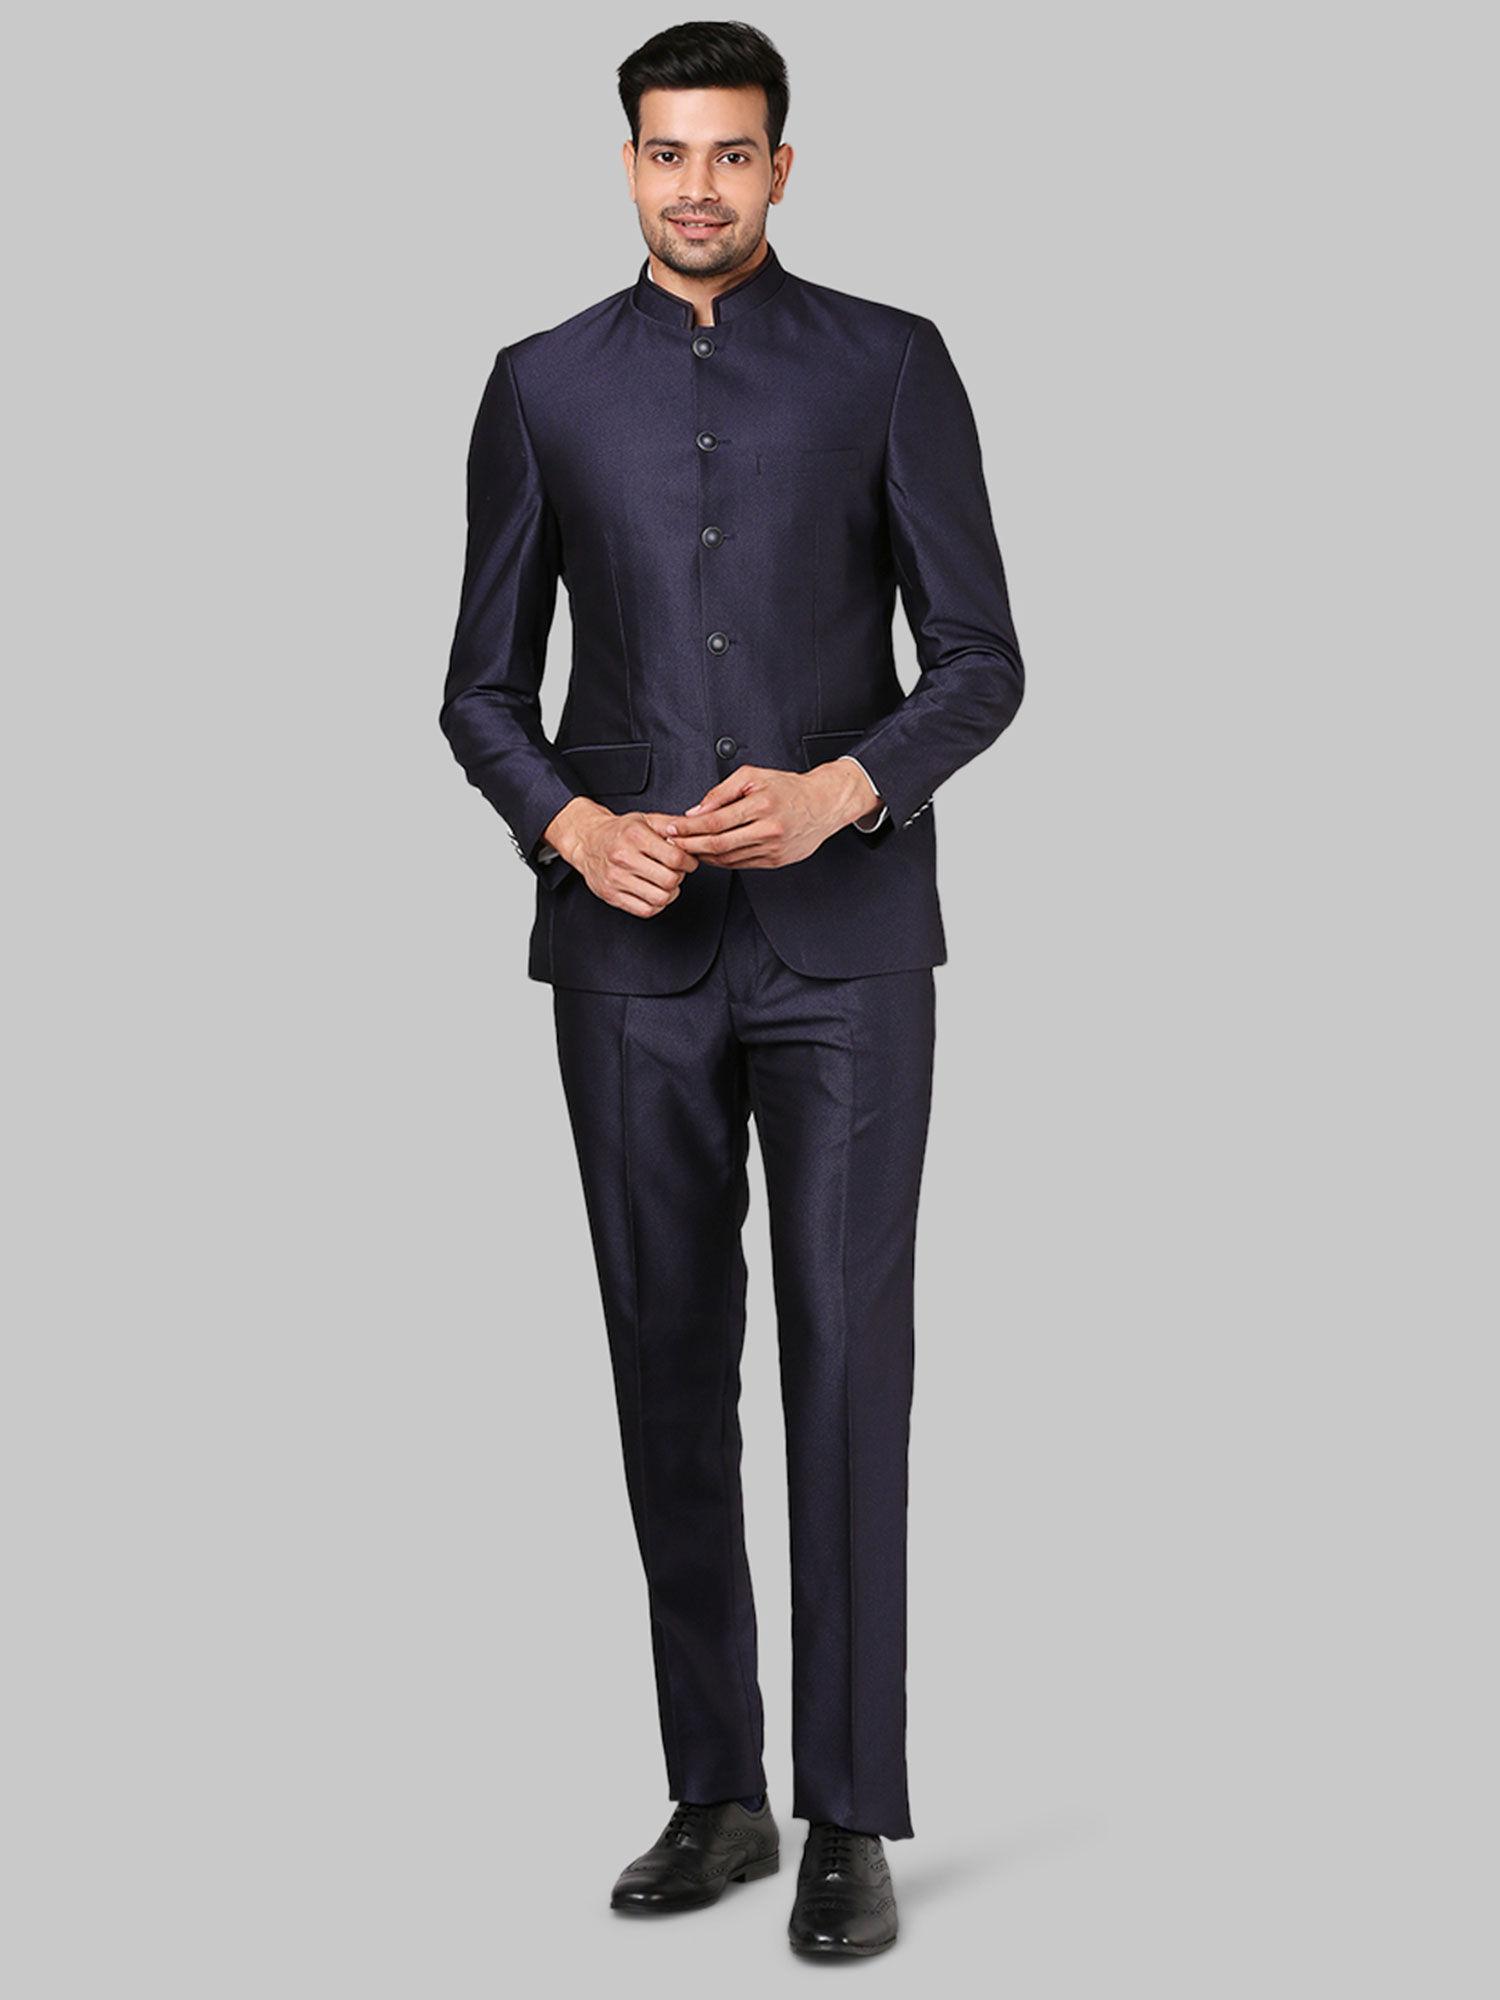 medium violet suits (set of 2)